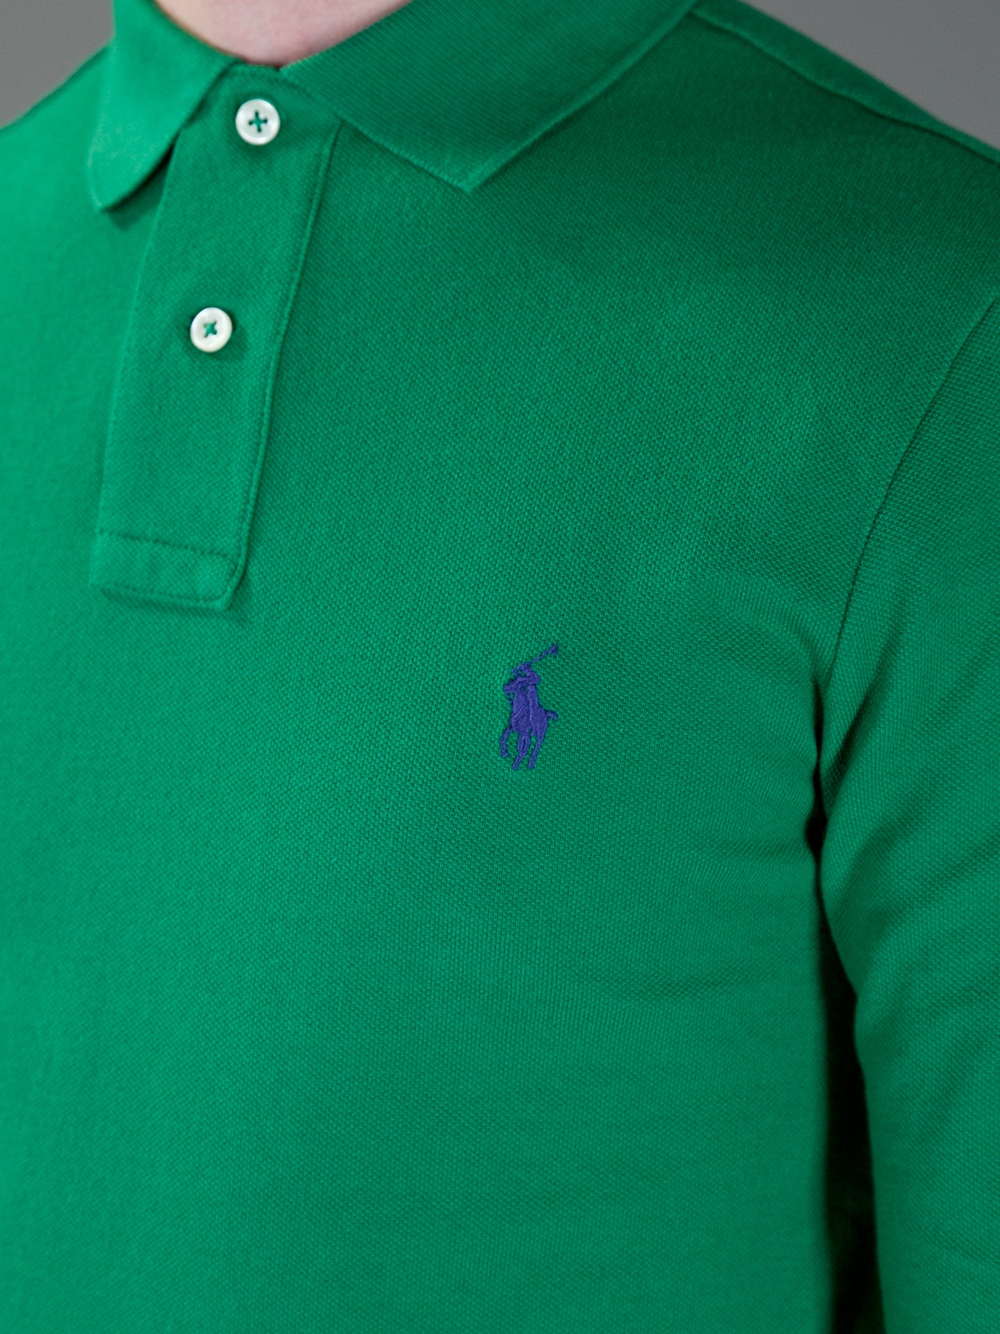 Ralph Lauren Blue Label Long Sleeve Polo Shirt in Green for Men - Lyst